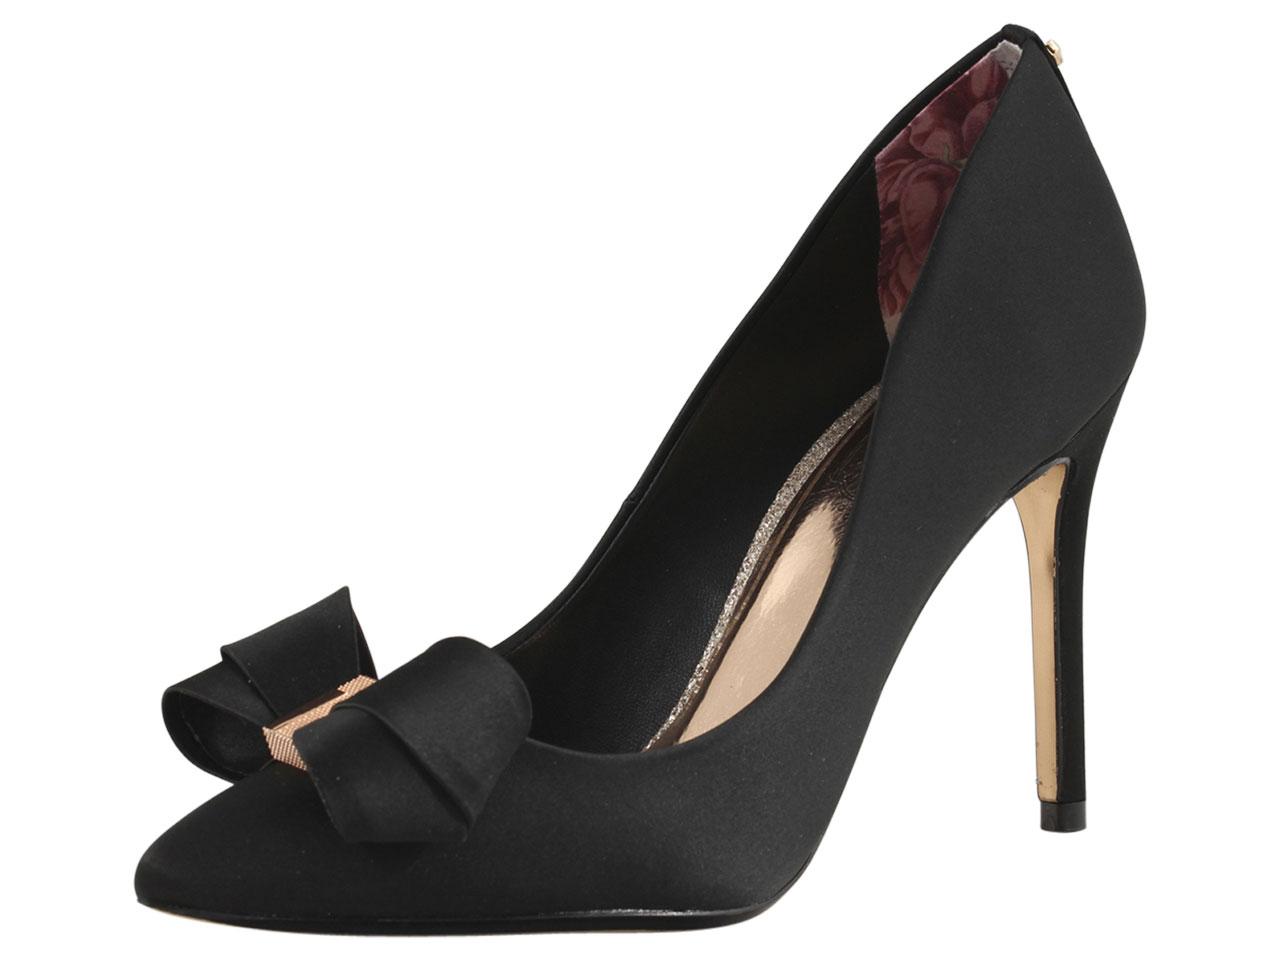 Ted Baker Women's Skalett Pumps Heels Shoes - Black - 8 B(M) US